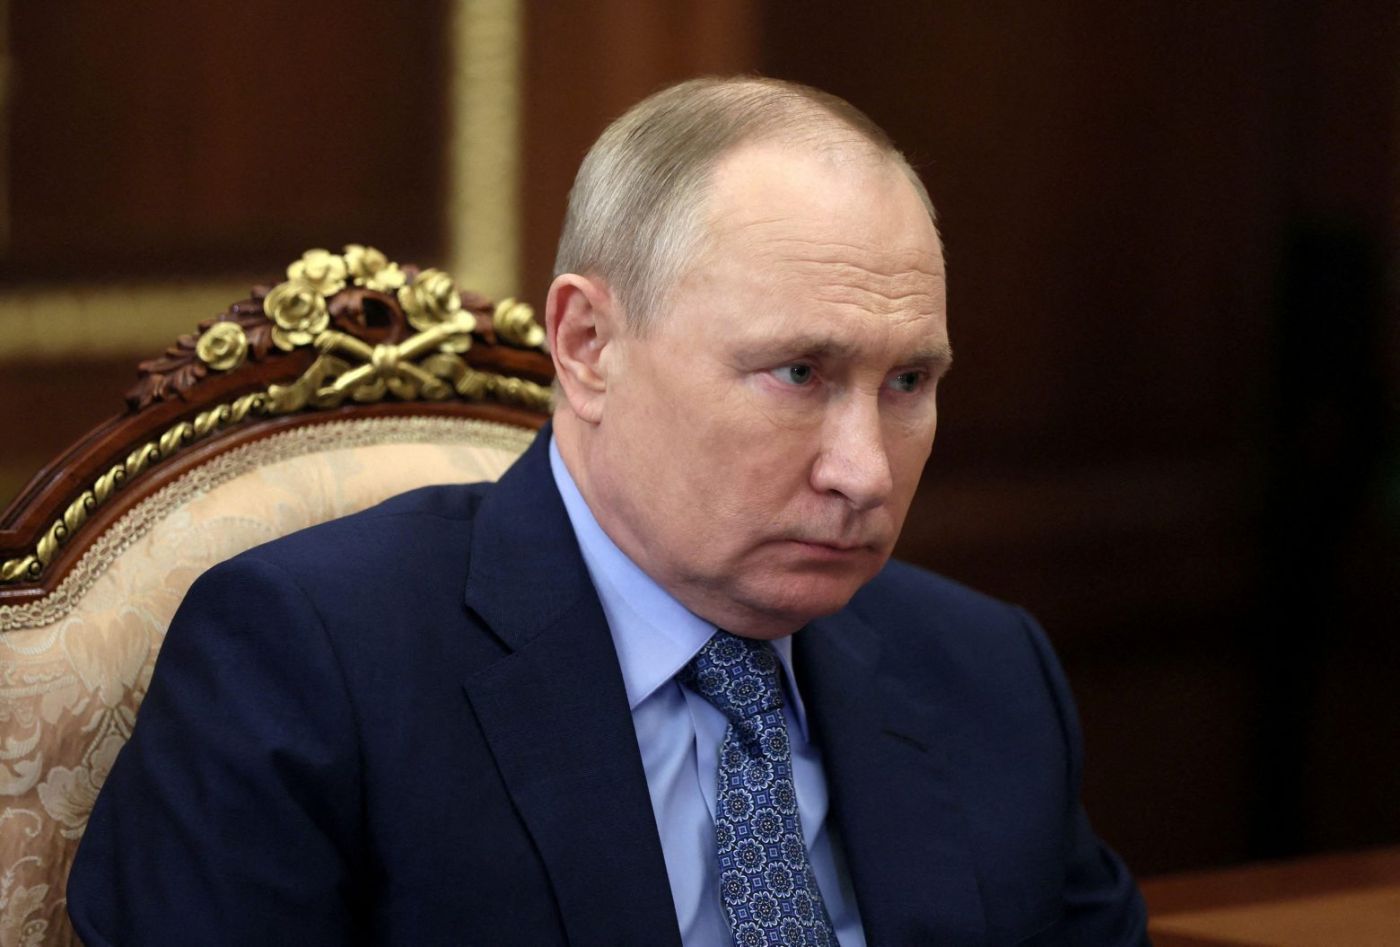 B.Πούτιν: «Να απομακρυνθούν οι άμαχοι από το Azovstal σε συνενόηση με τον ΟΗΕ»